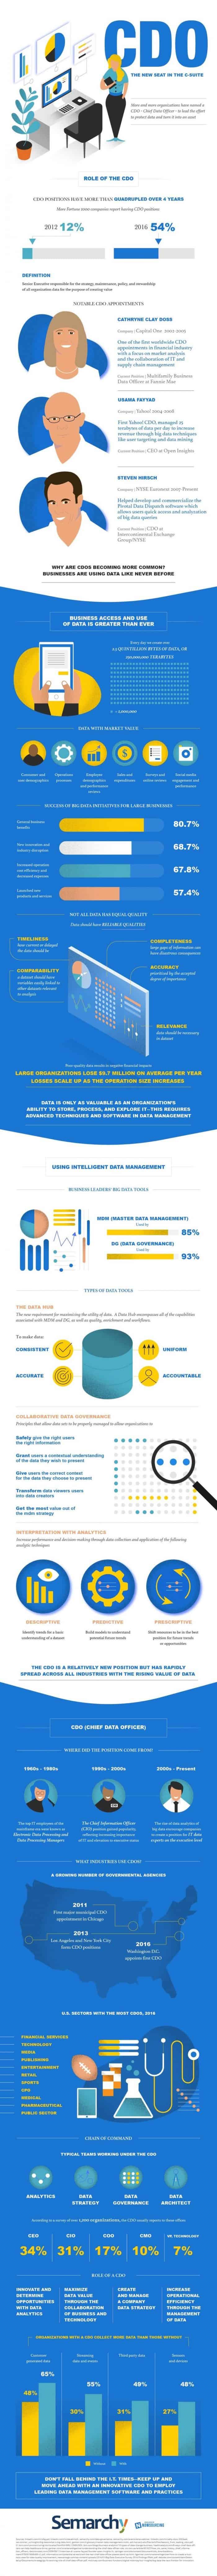 CDO job market infographic